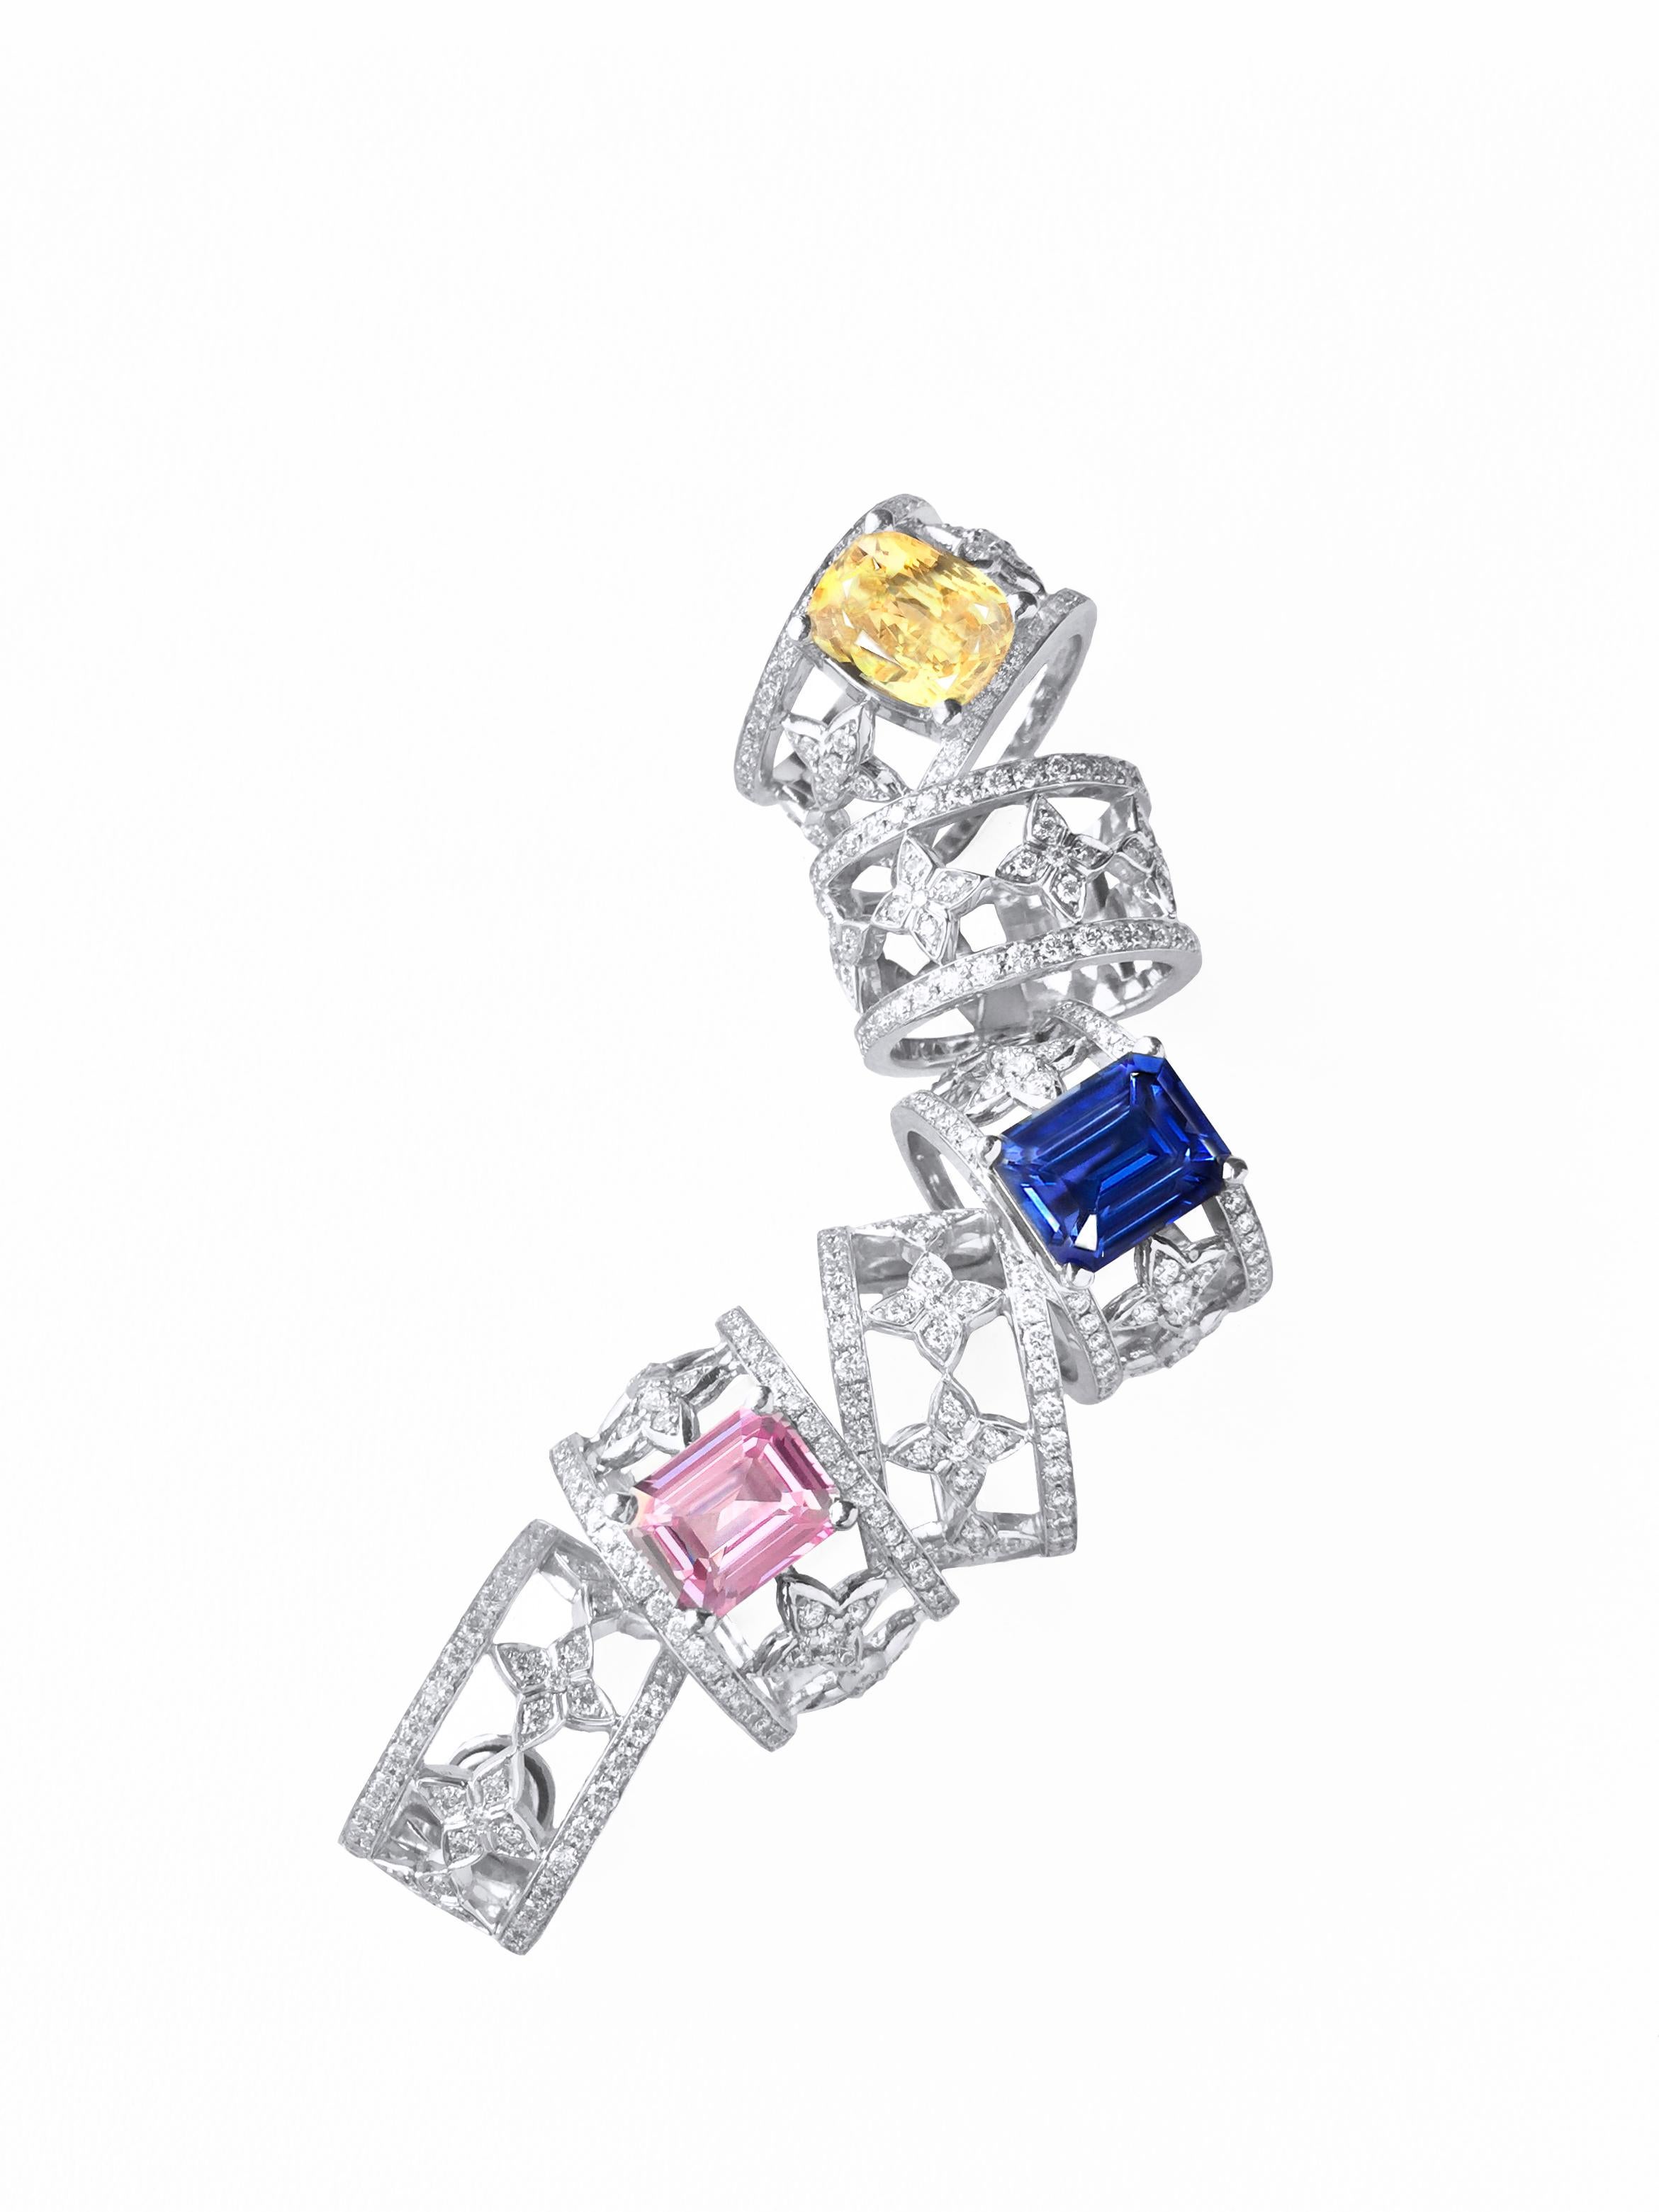 Emerald Cut Blue Sapphire and Diamond Ring in Platinum 5